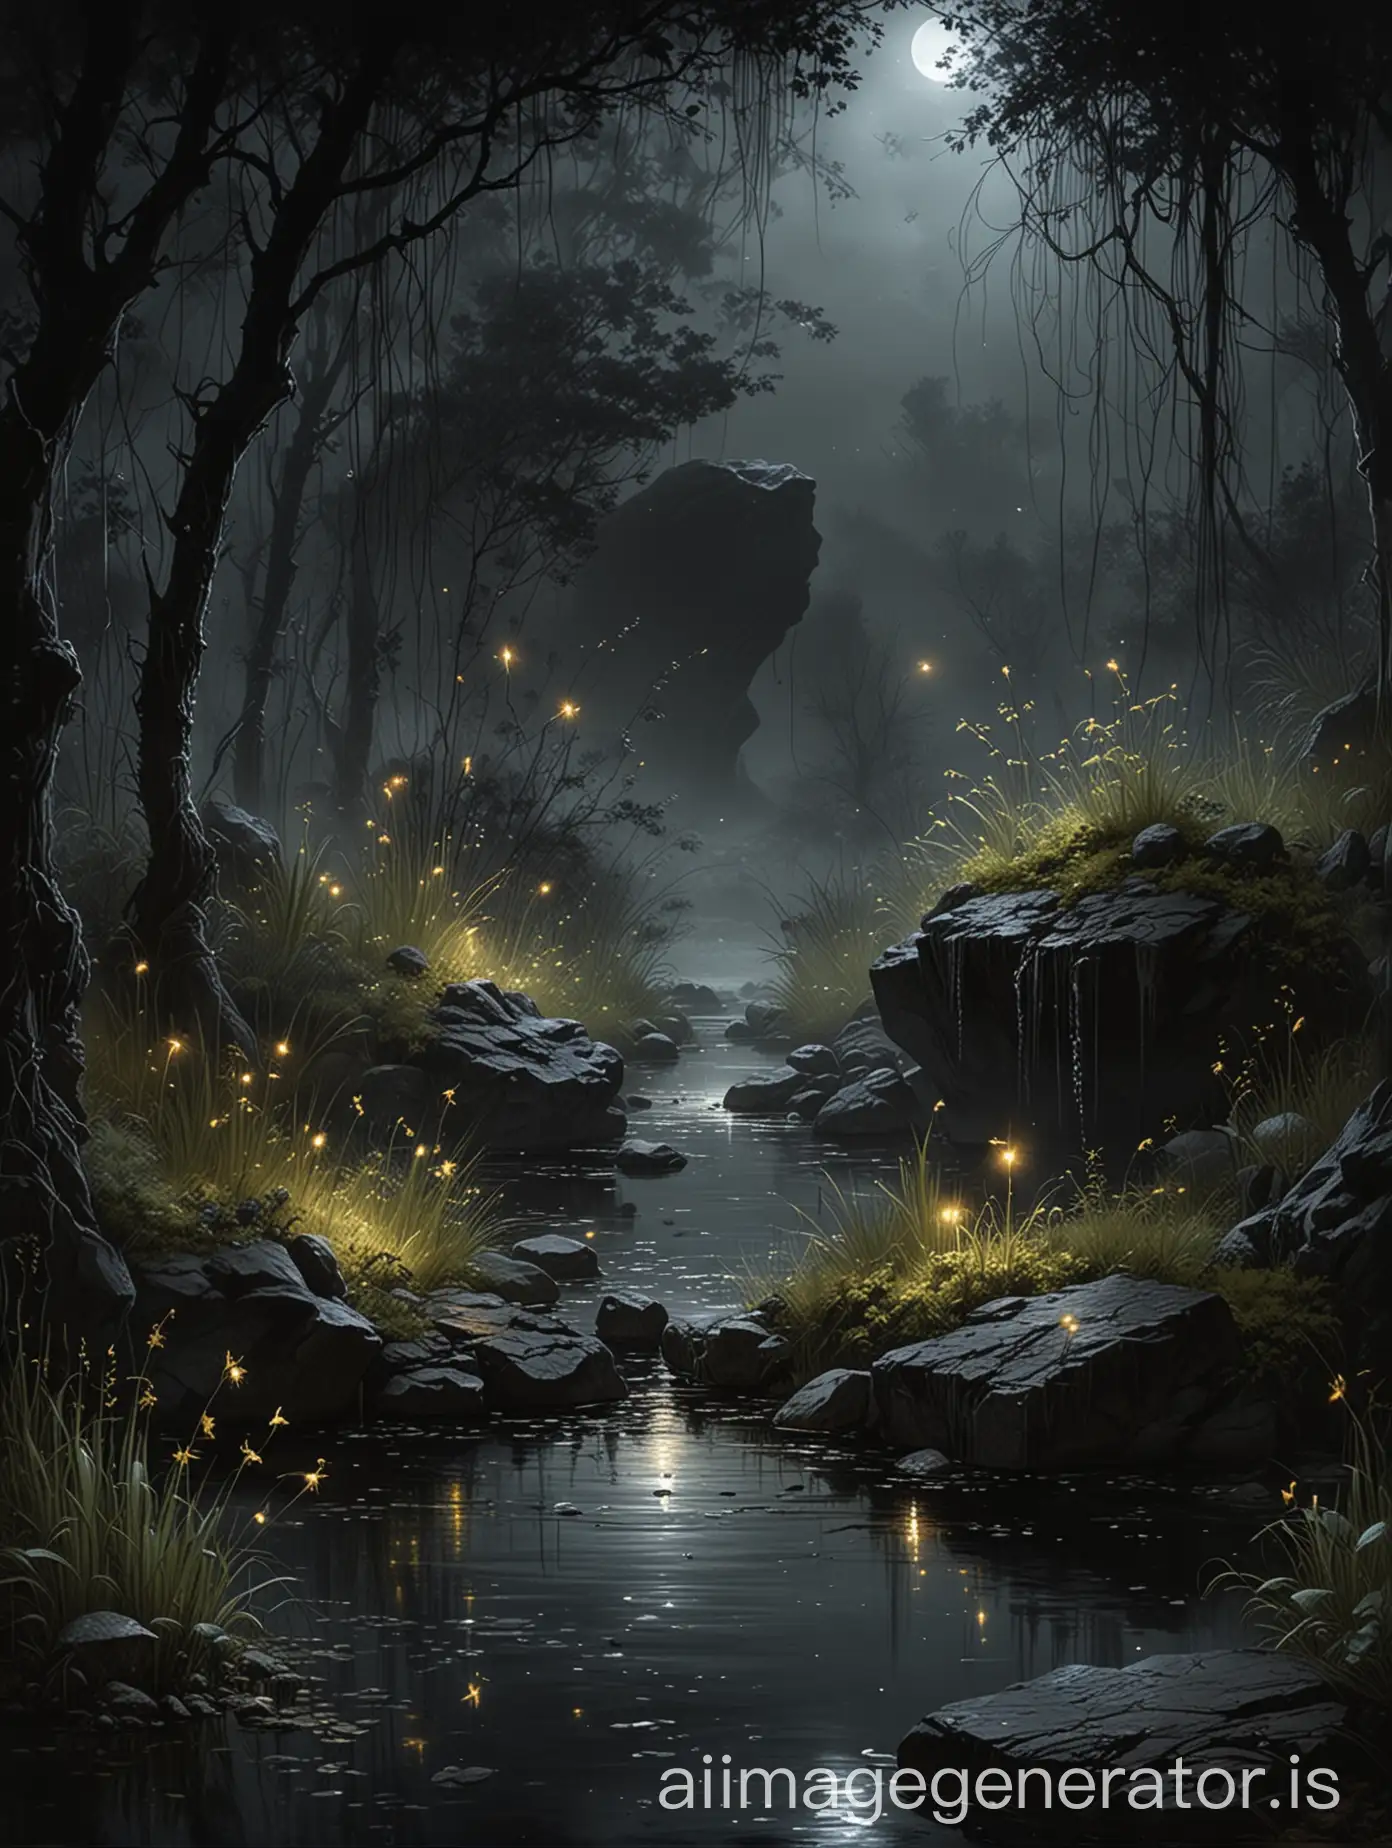 Dark-Fantasy-Scene-with-Wet-Rock-and-Fireflies-in-Gloomy-Gardenscape